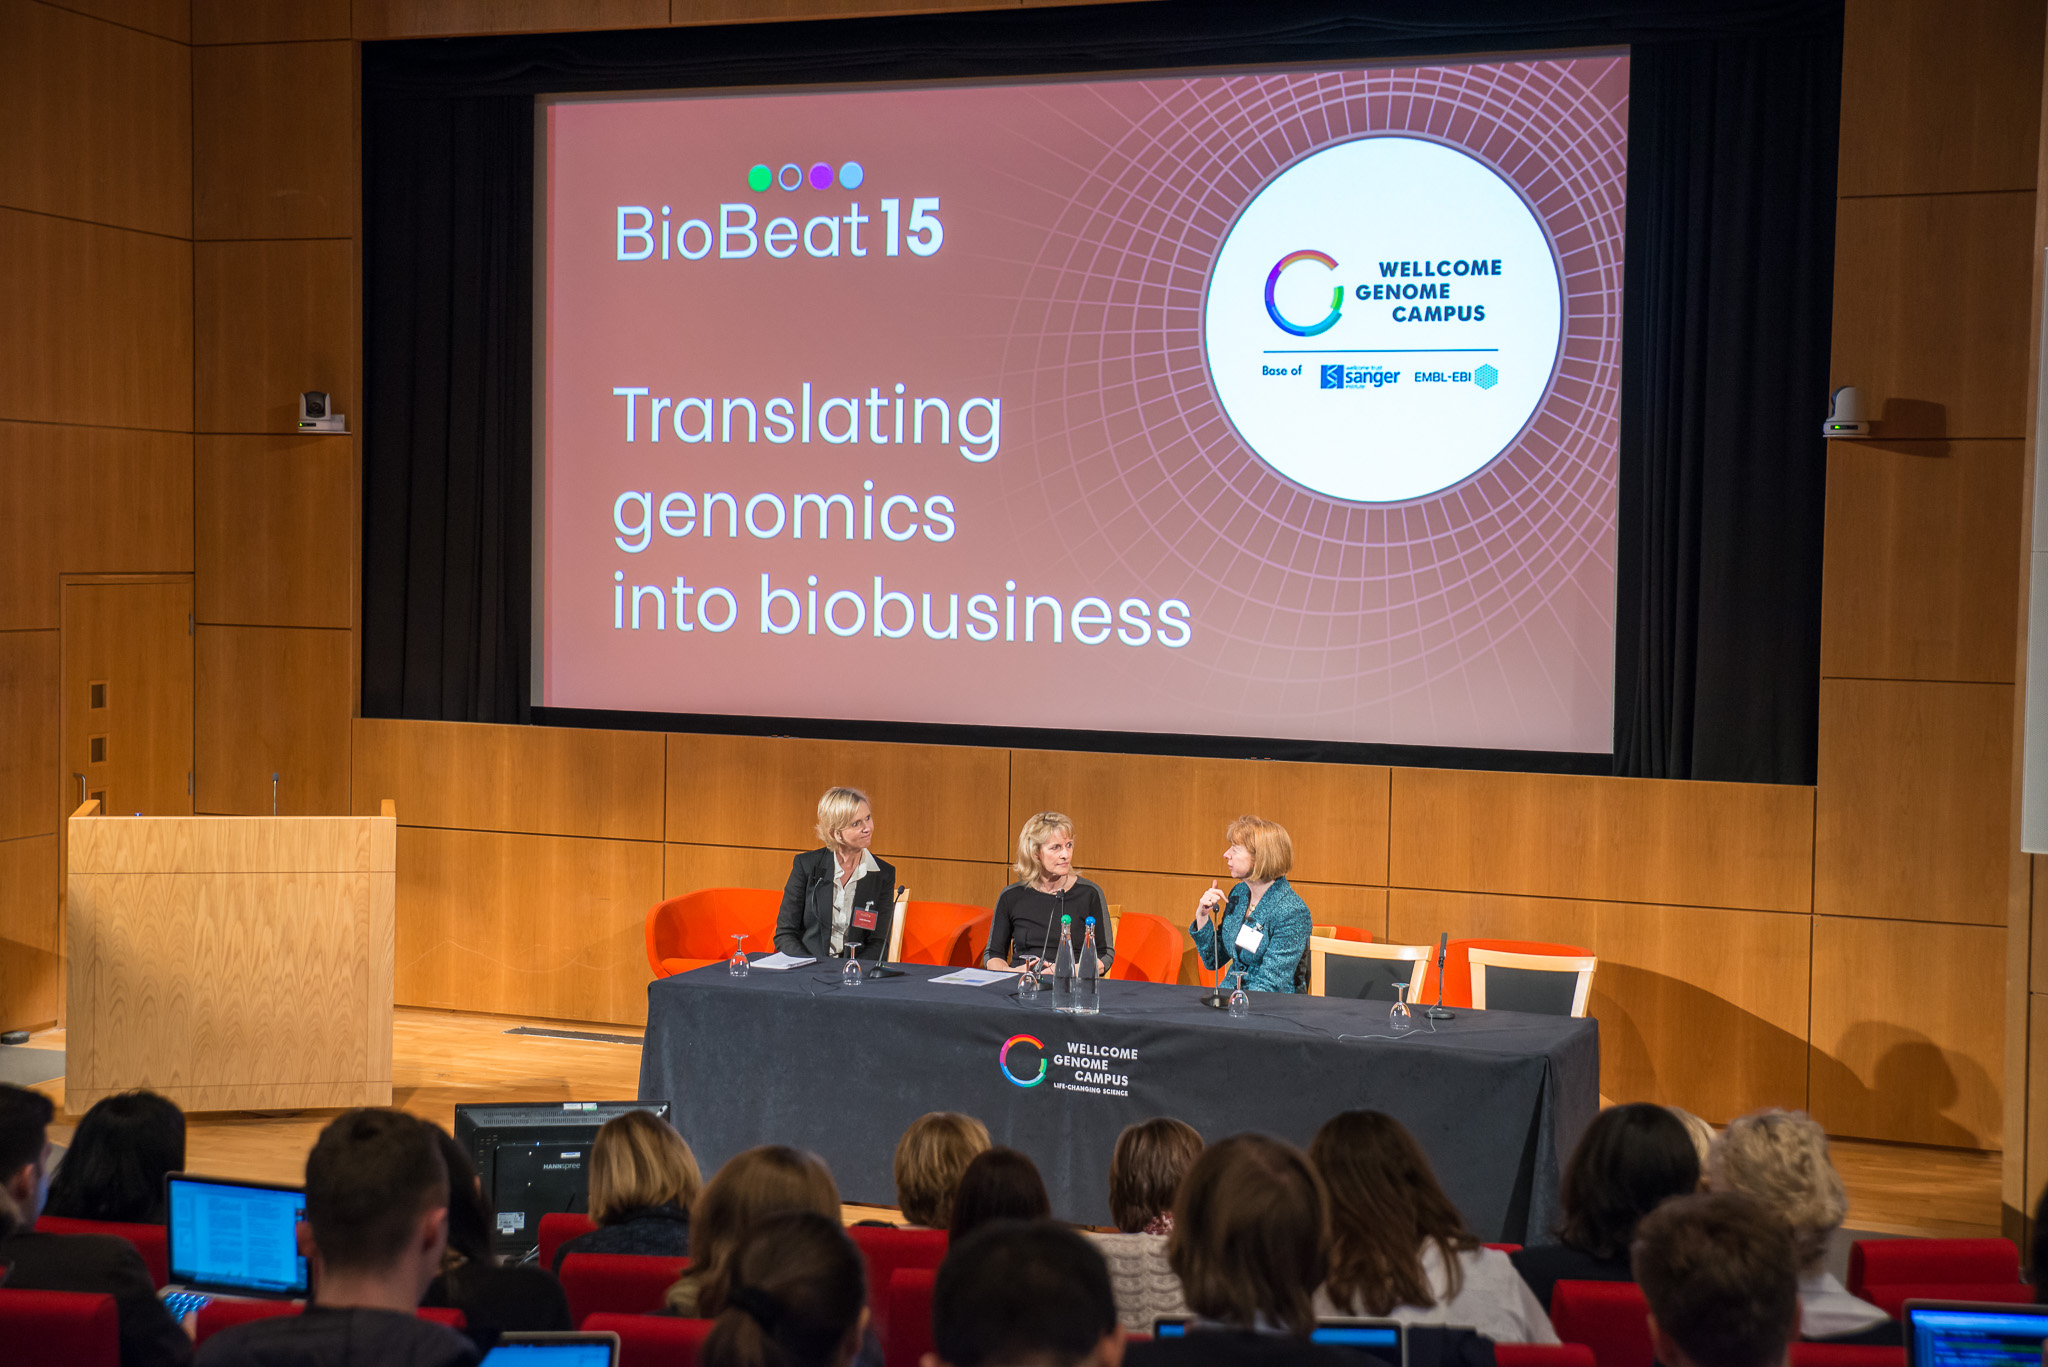 BioBeat15: Julie Barnes, Jeanne Bolger and Ruth McKernan